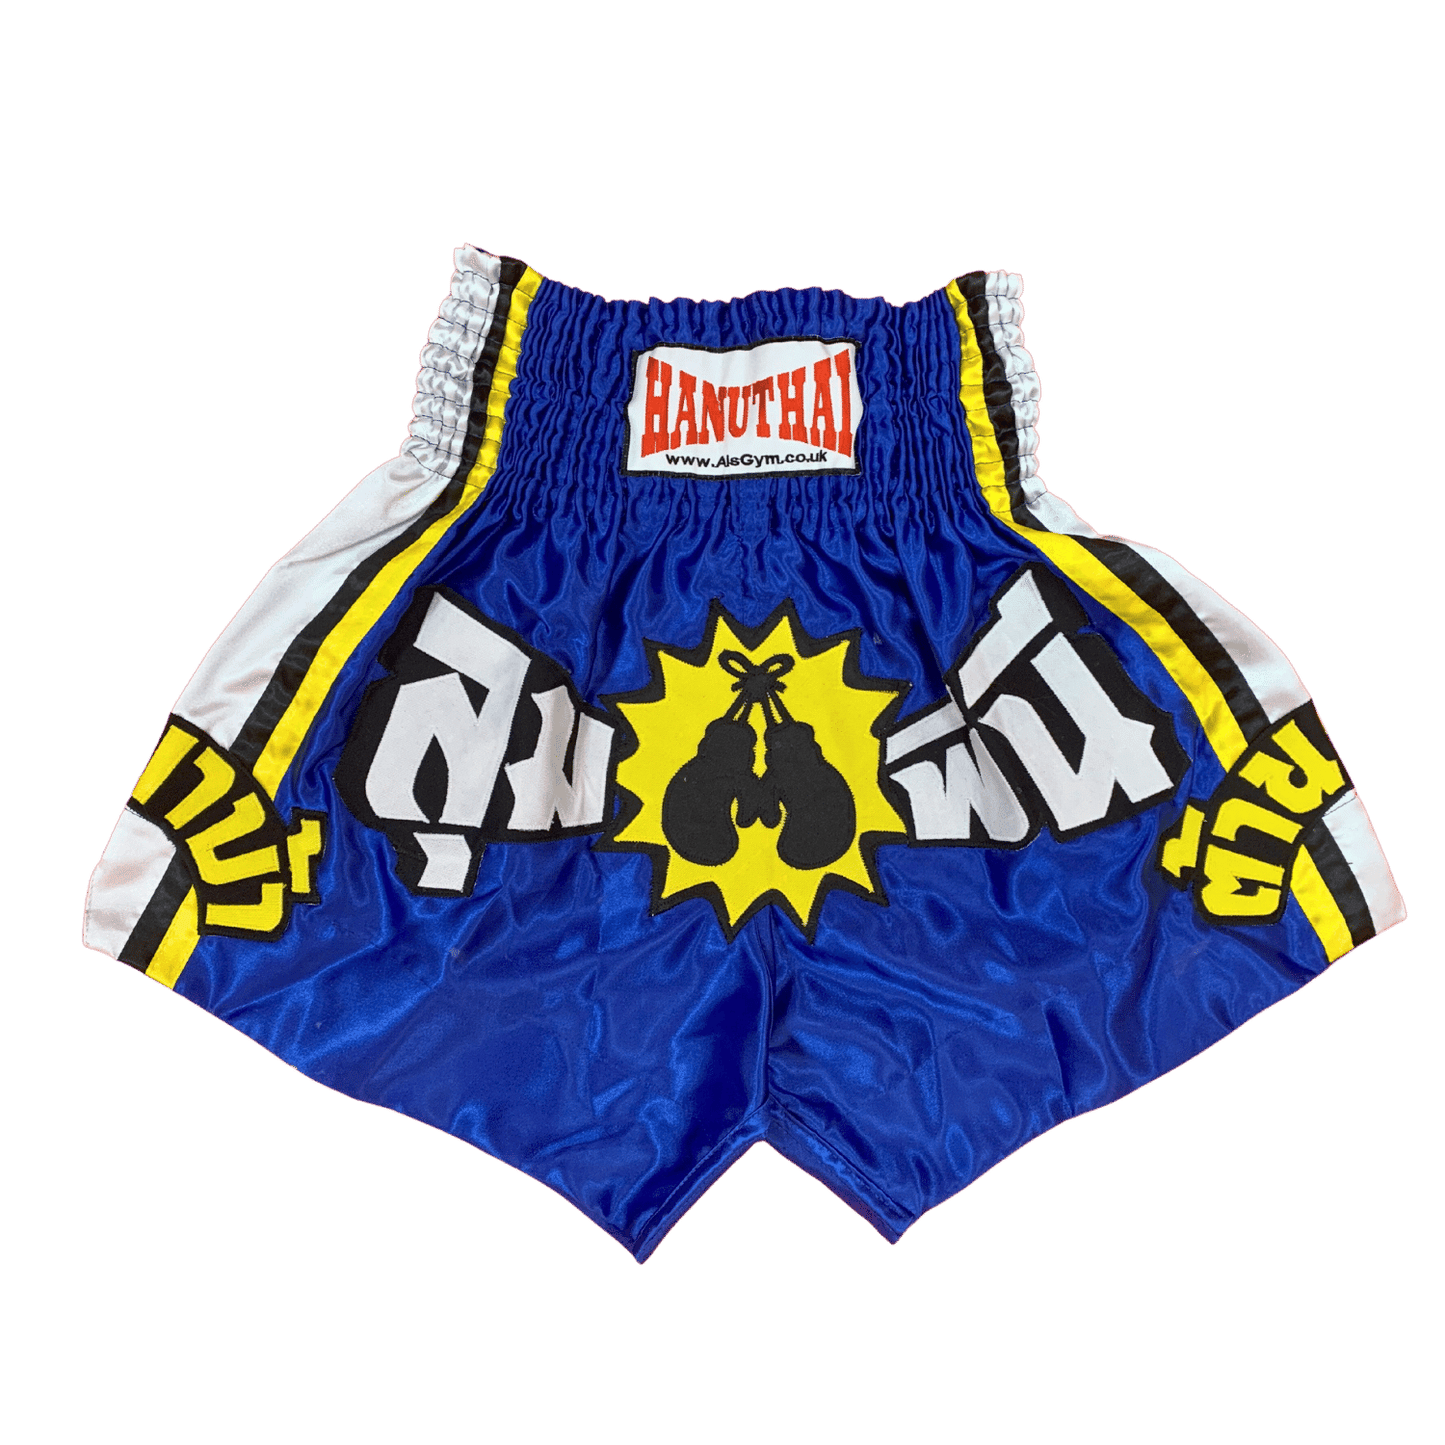 A pair of regal blue and yellow Hanuthai Ringmaster Rumble Muay Thai boxing shorts.